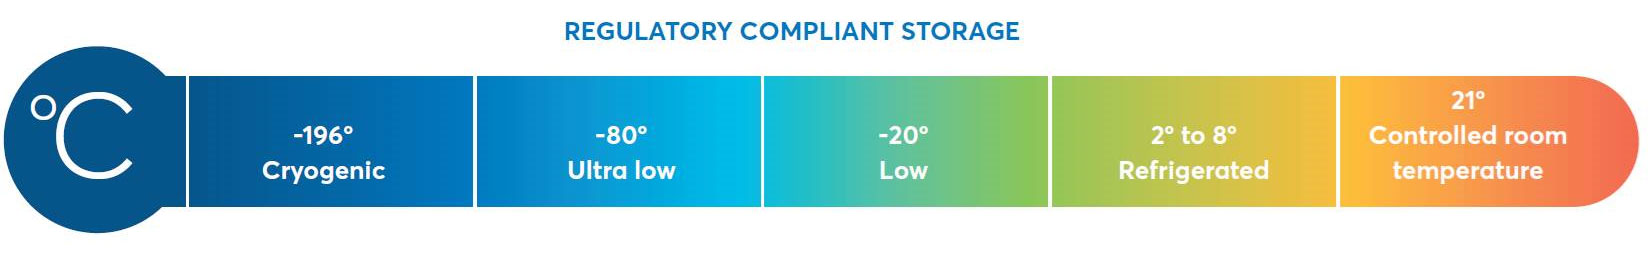 Regulatory compliant storage temperature inforgraphic